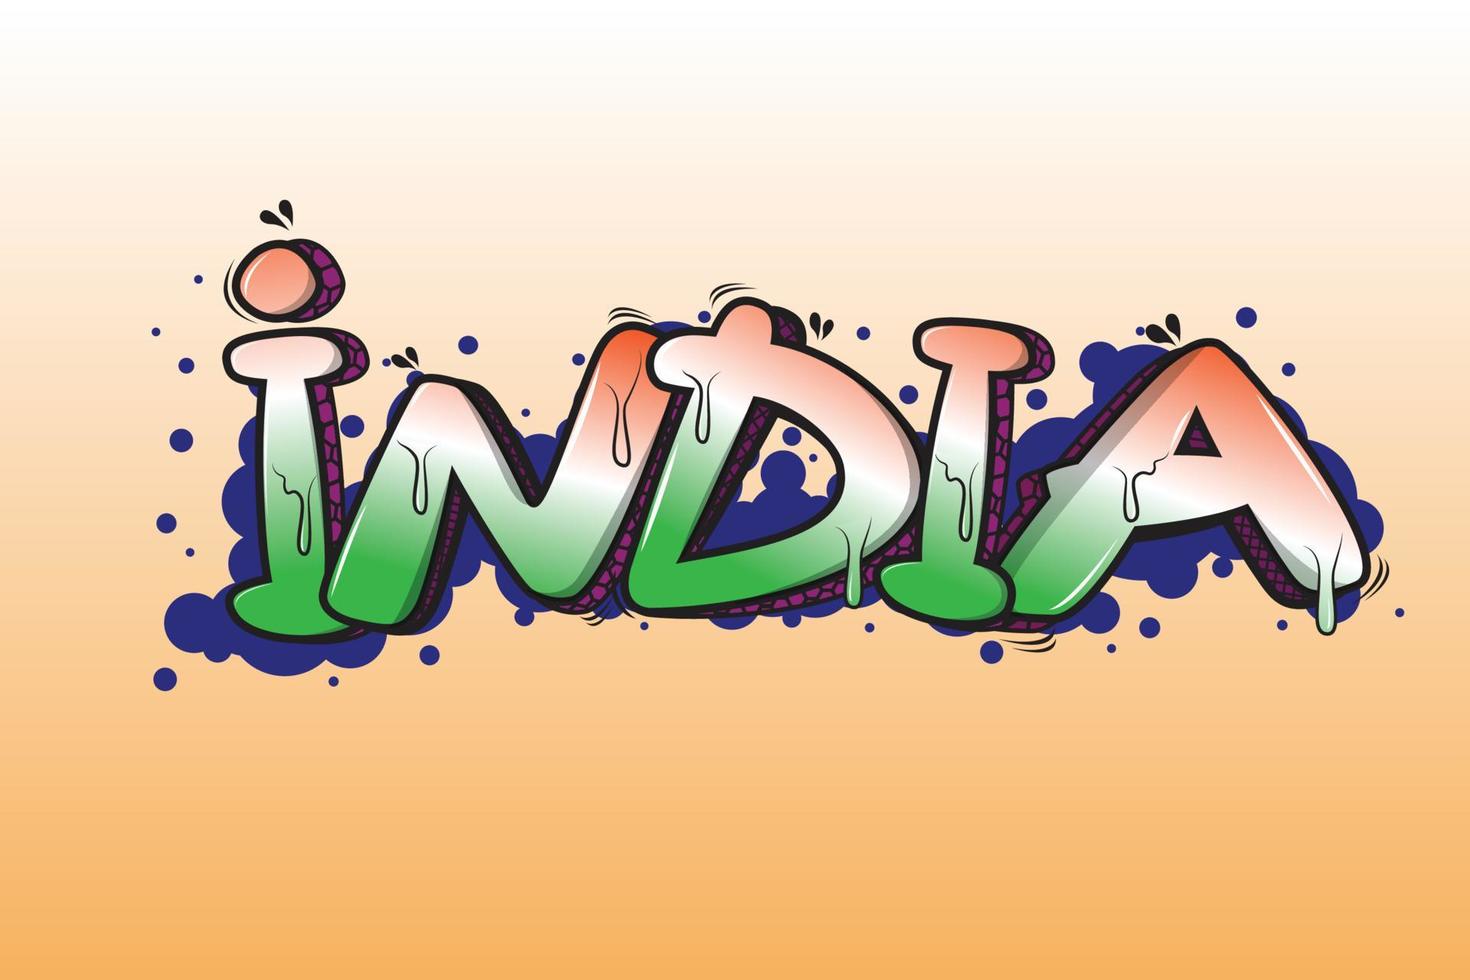 Indië in graffiti stijl premie vector illustratie